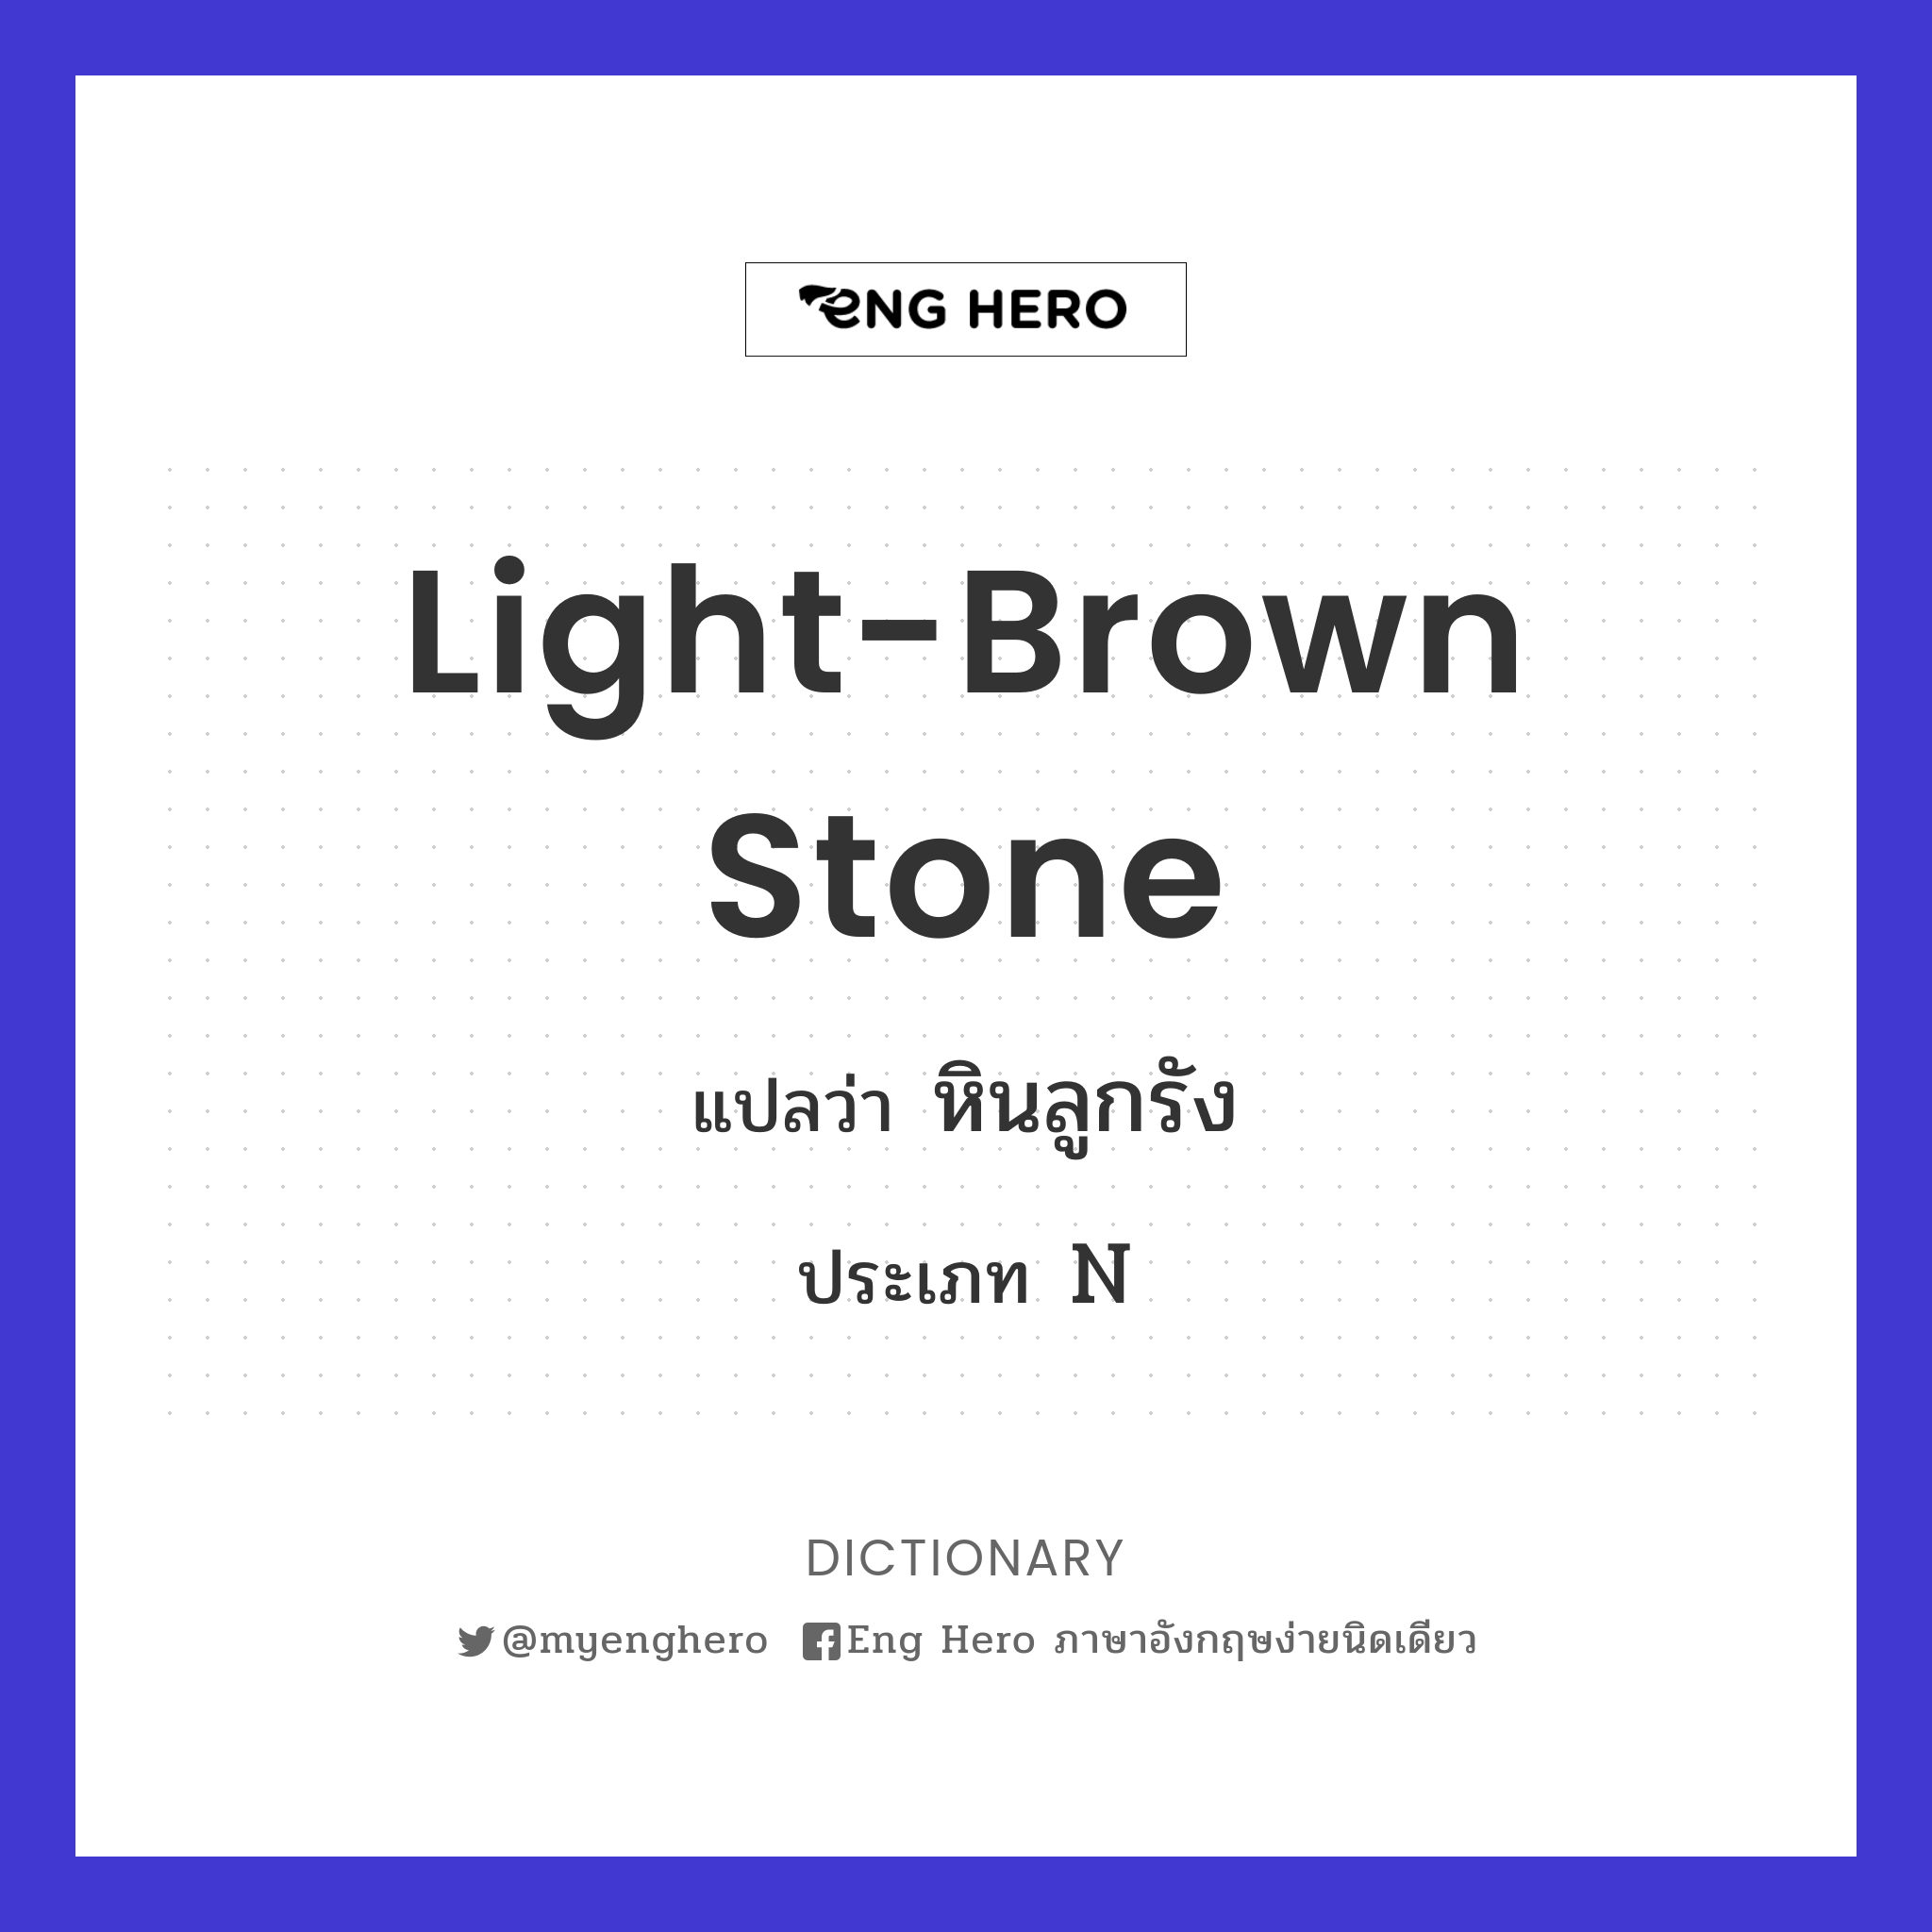 light-brown stone